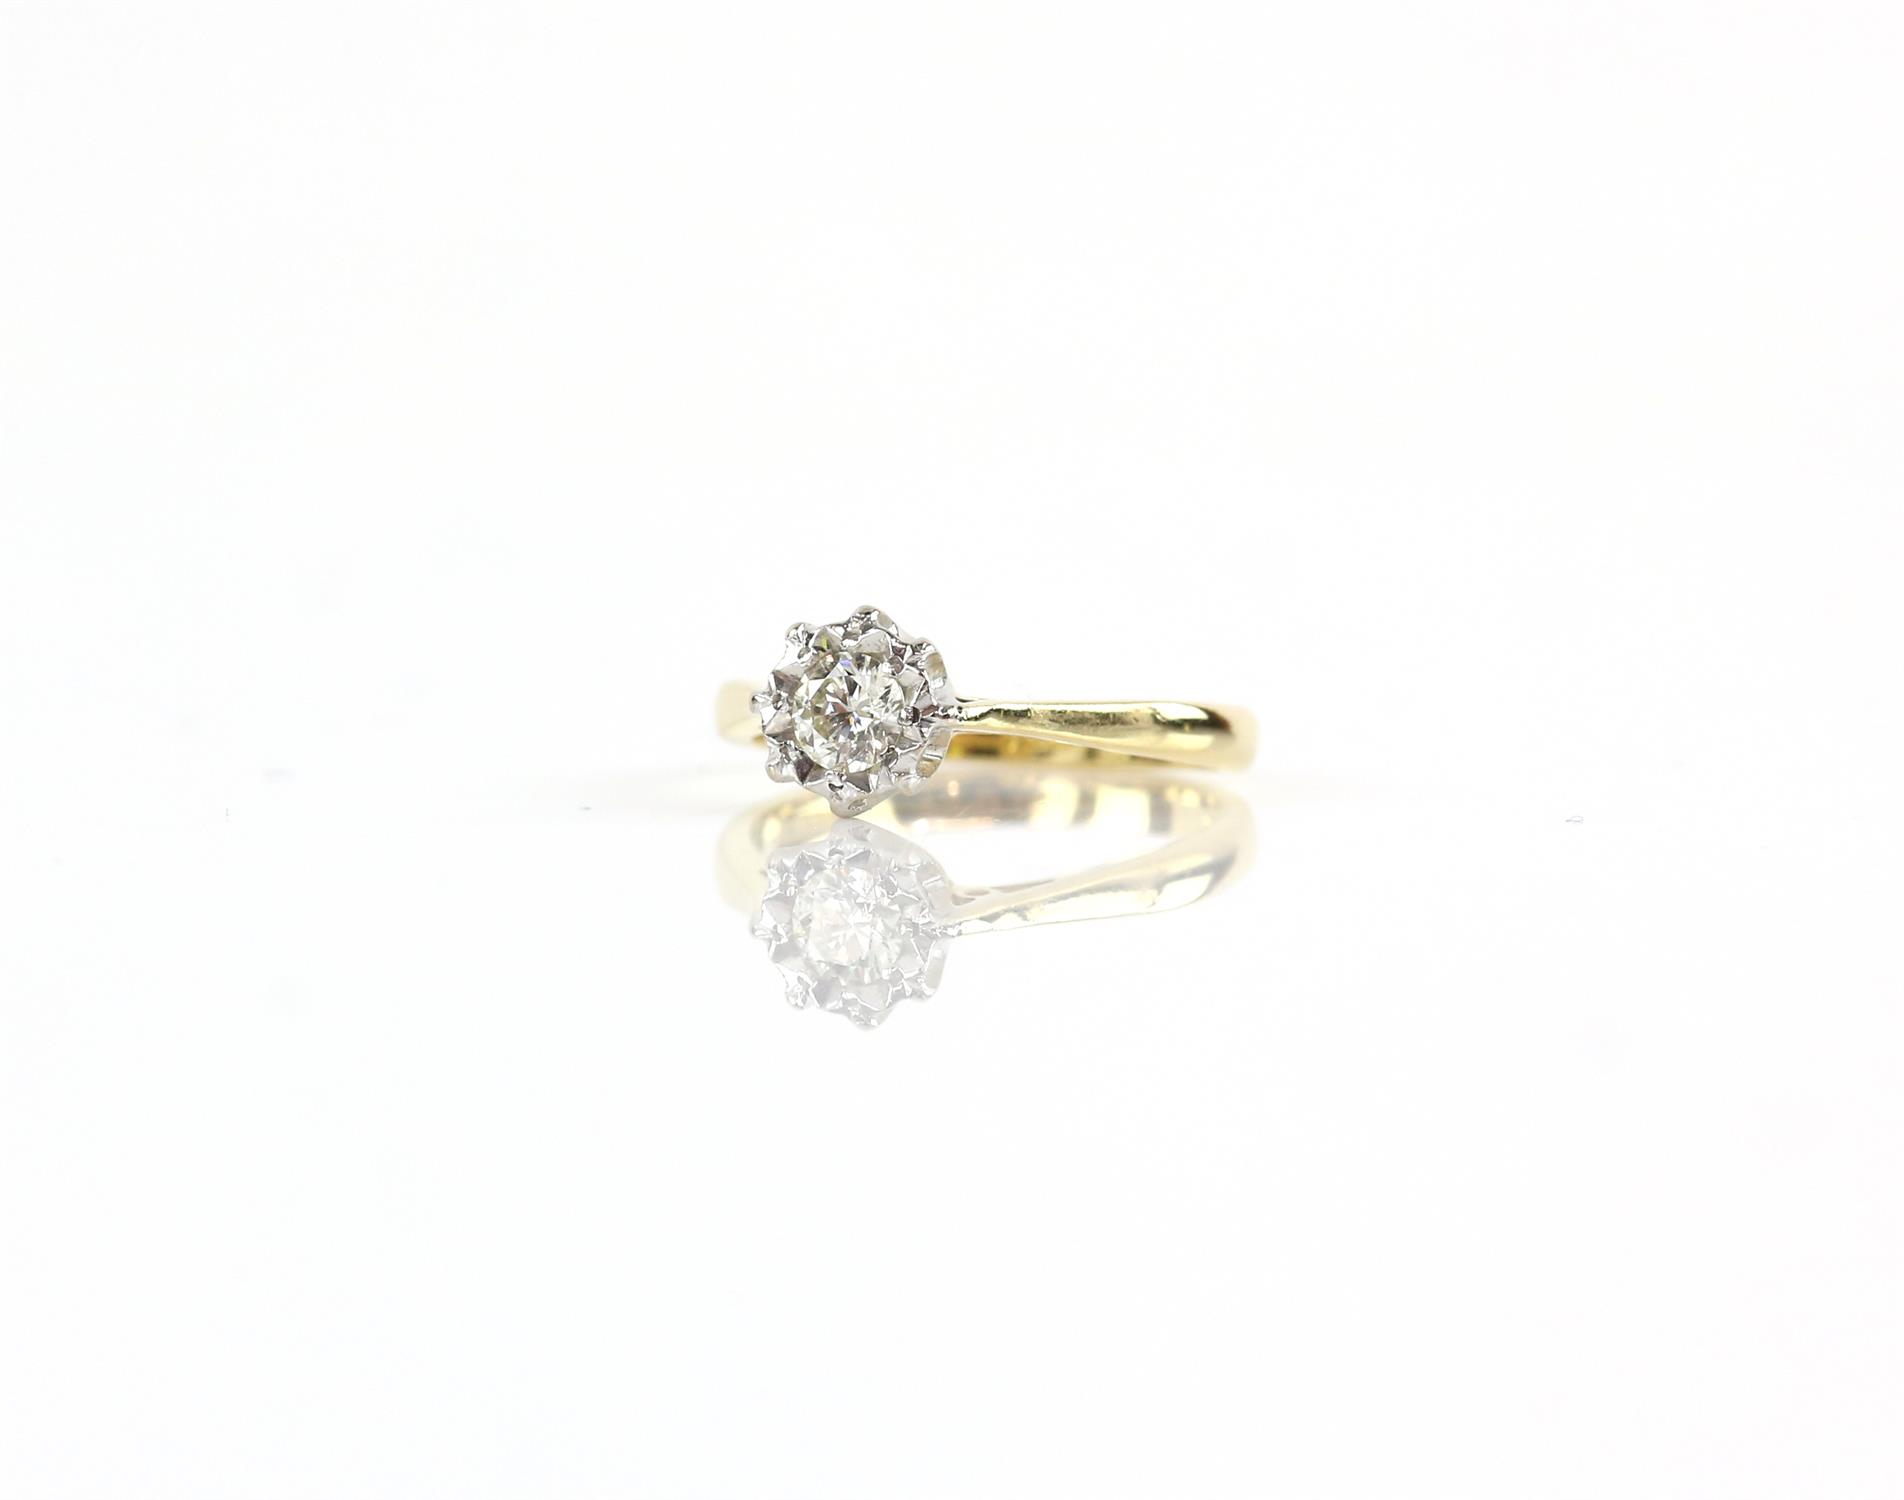 Vintage single stone diamond ring, round brilliant cut diamond weighing an estimated 0.31 carat,